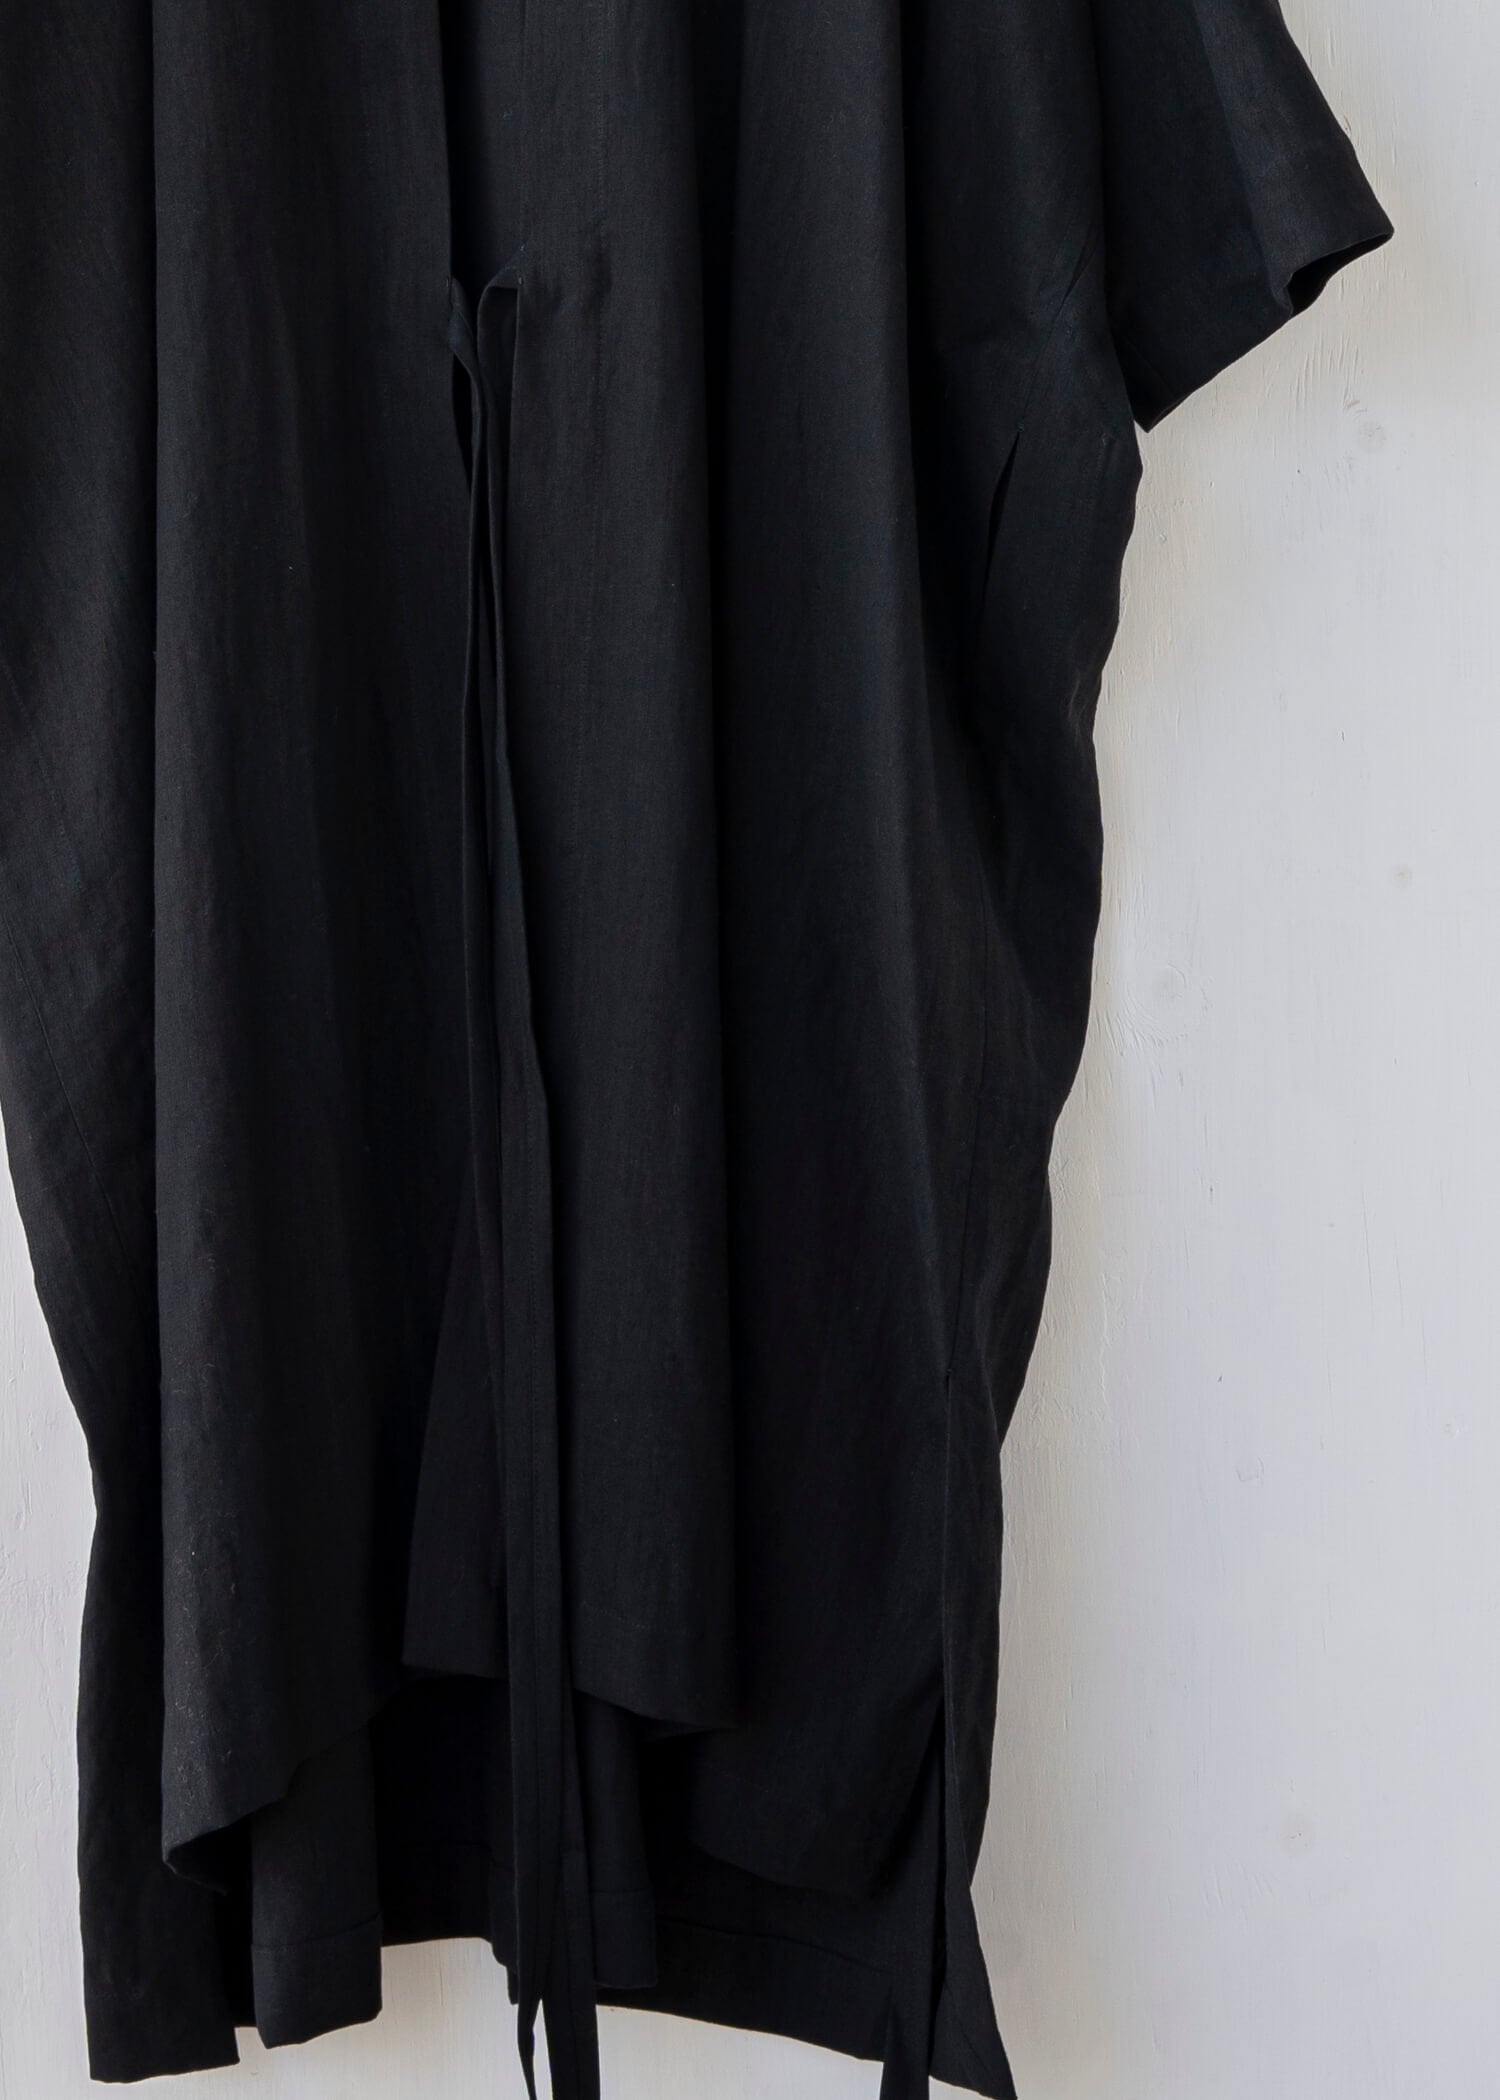 JAN-JAN VAN ESSCHE / "KIMONO#8" BLACK LINEN/PAPER CLOTH